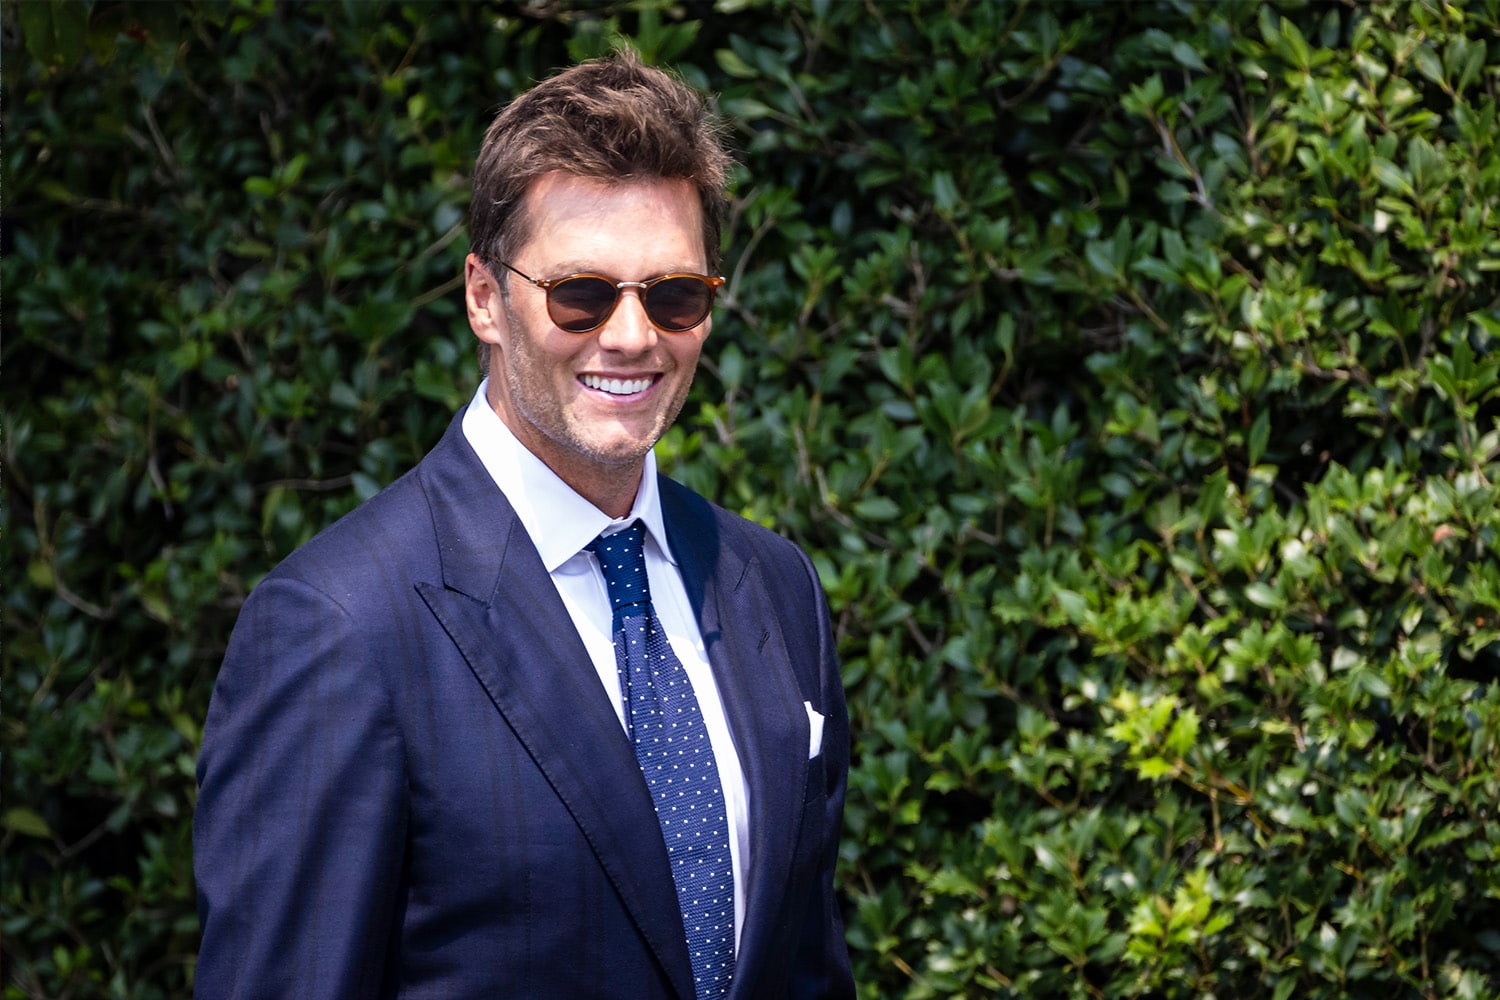 Tom Brady wearing sunglasses.